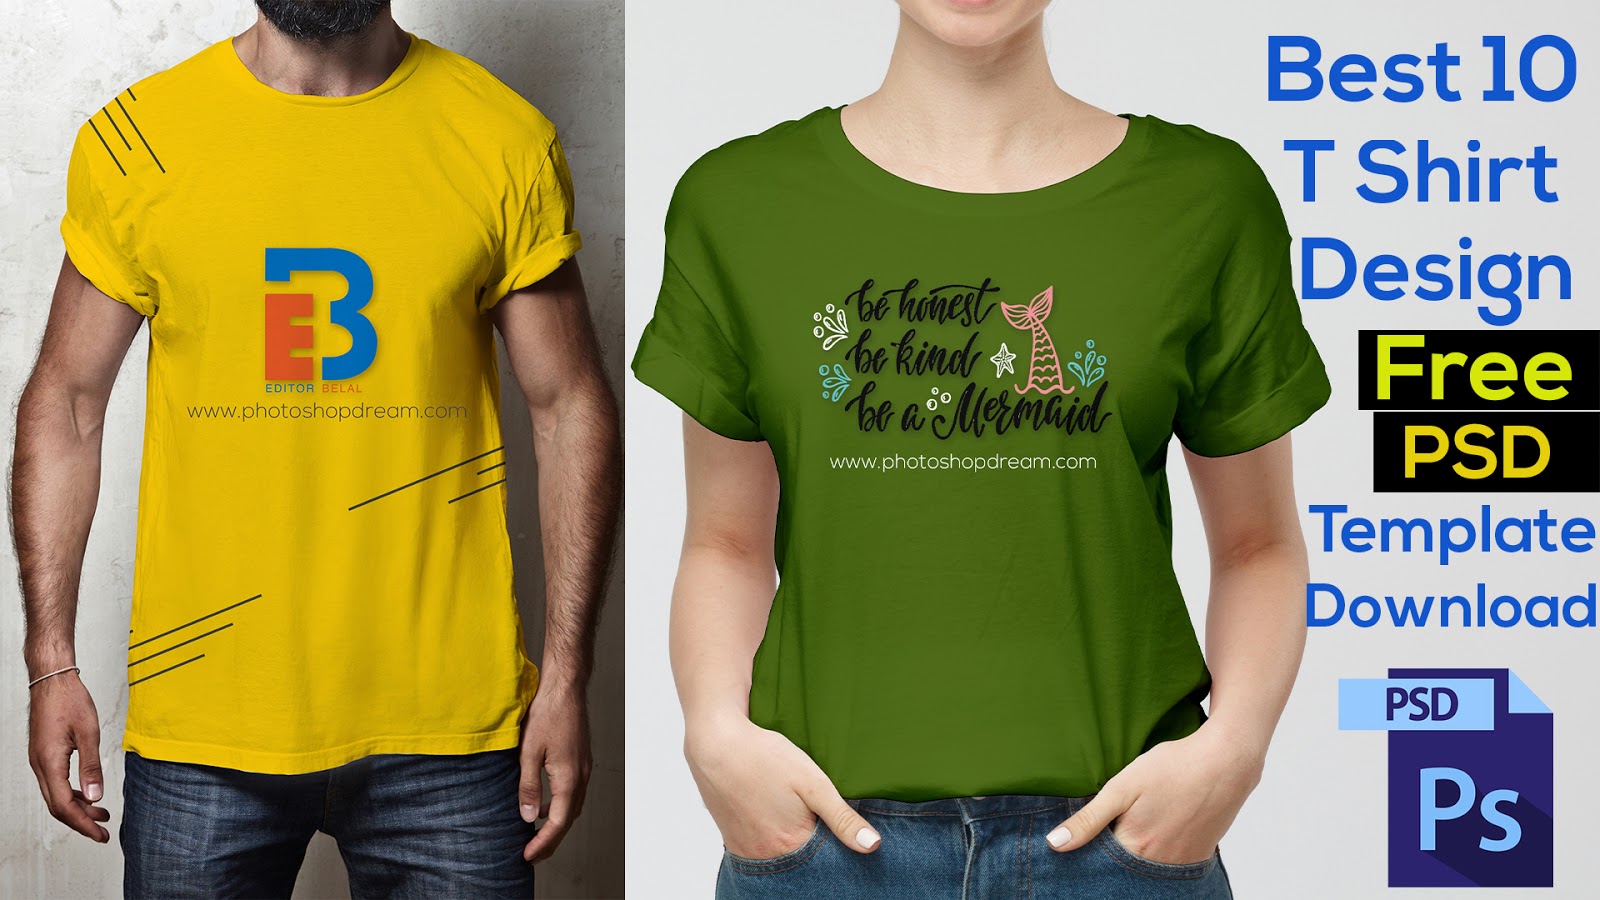 Best 10 T-Shirt Design Template PSD Free Download | T ...